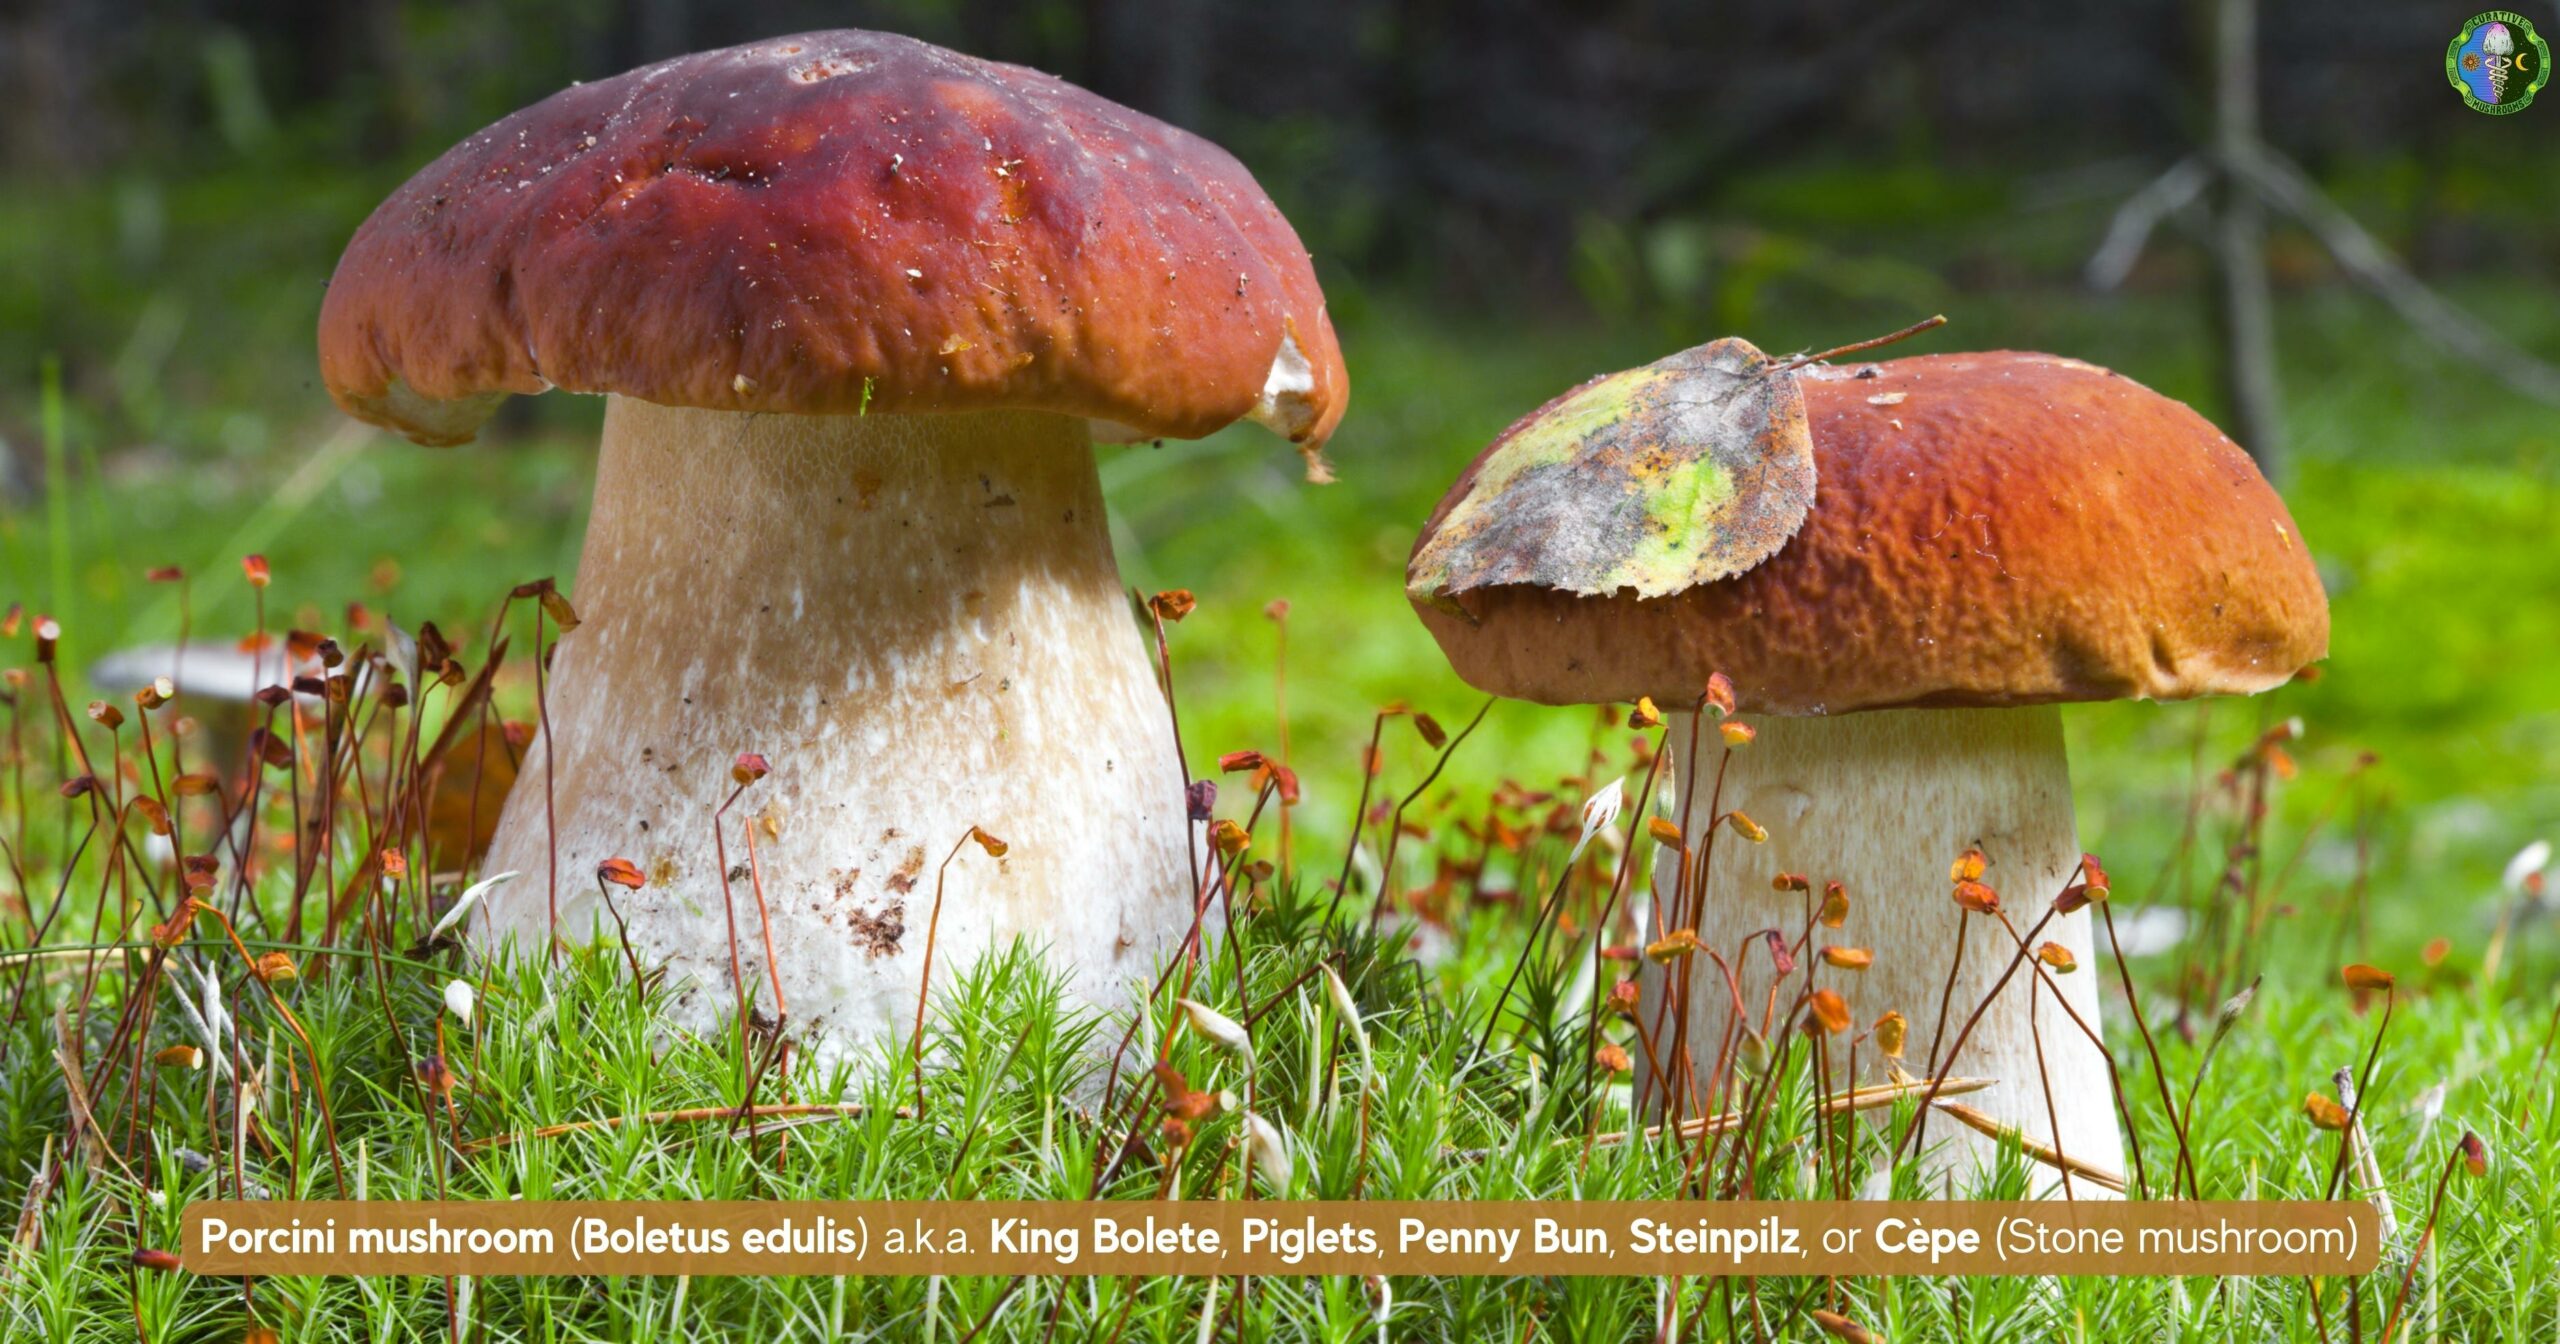 What is another name for Porcini mushroom - Boletus edulis, King Bolete, Piglets, Penny Bun, Steinpilz, Cèpe or Stone mushroom